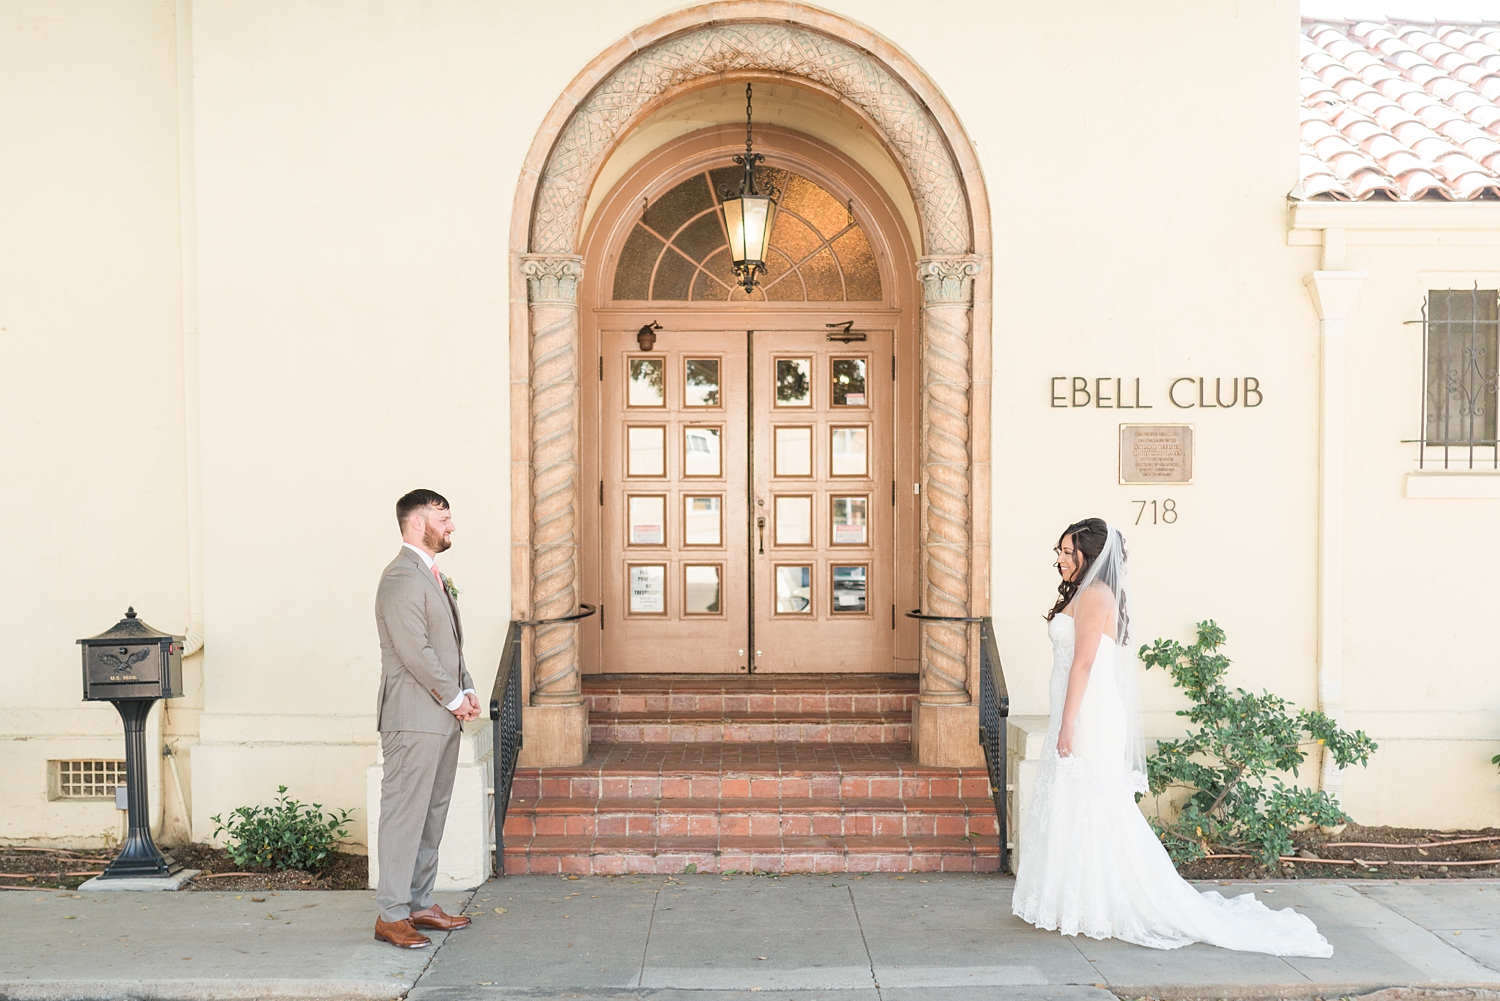 Ebell Club of Santa Ana OC Wedding Photographer_0046.jpg